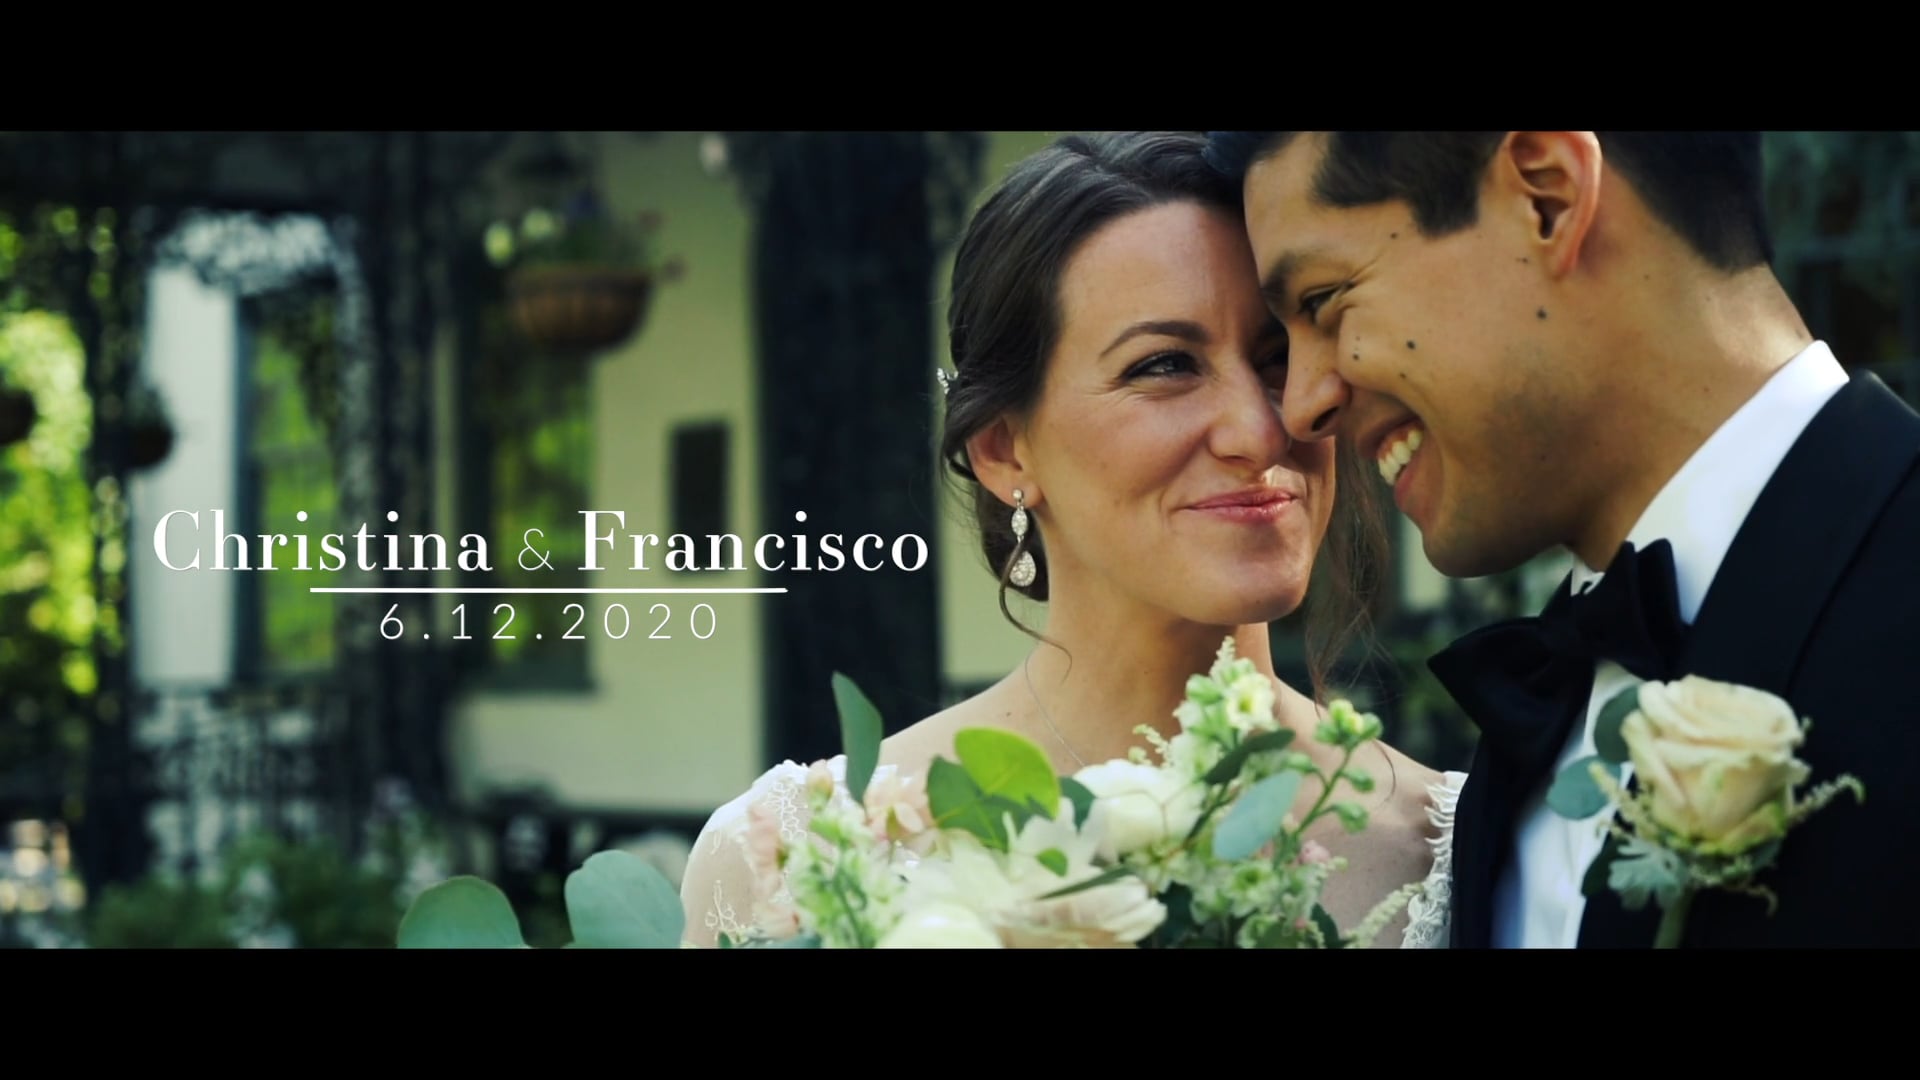 Christina & Francisco 6.12.2020